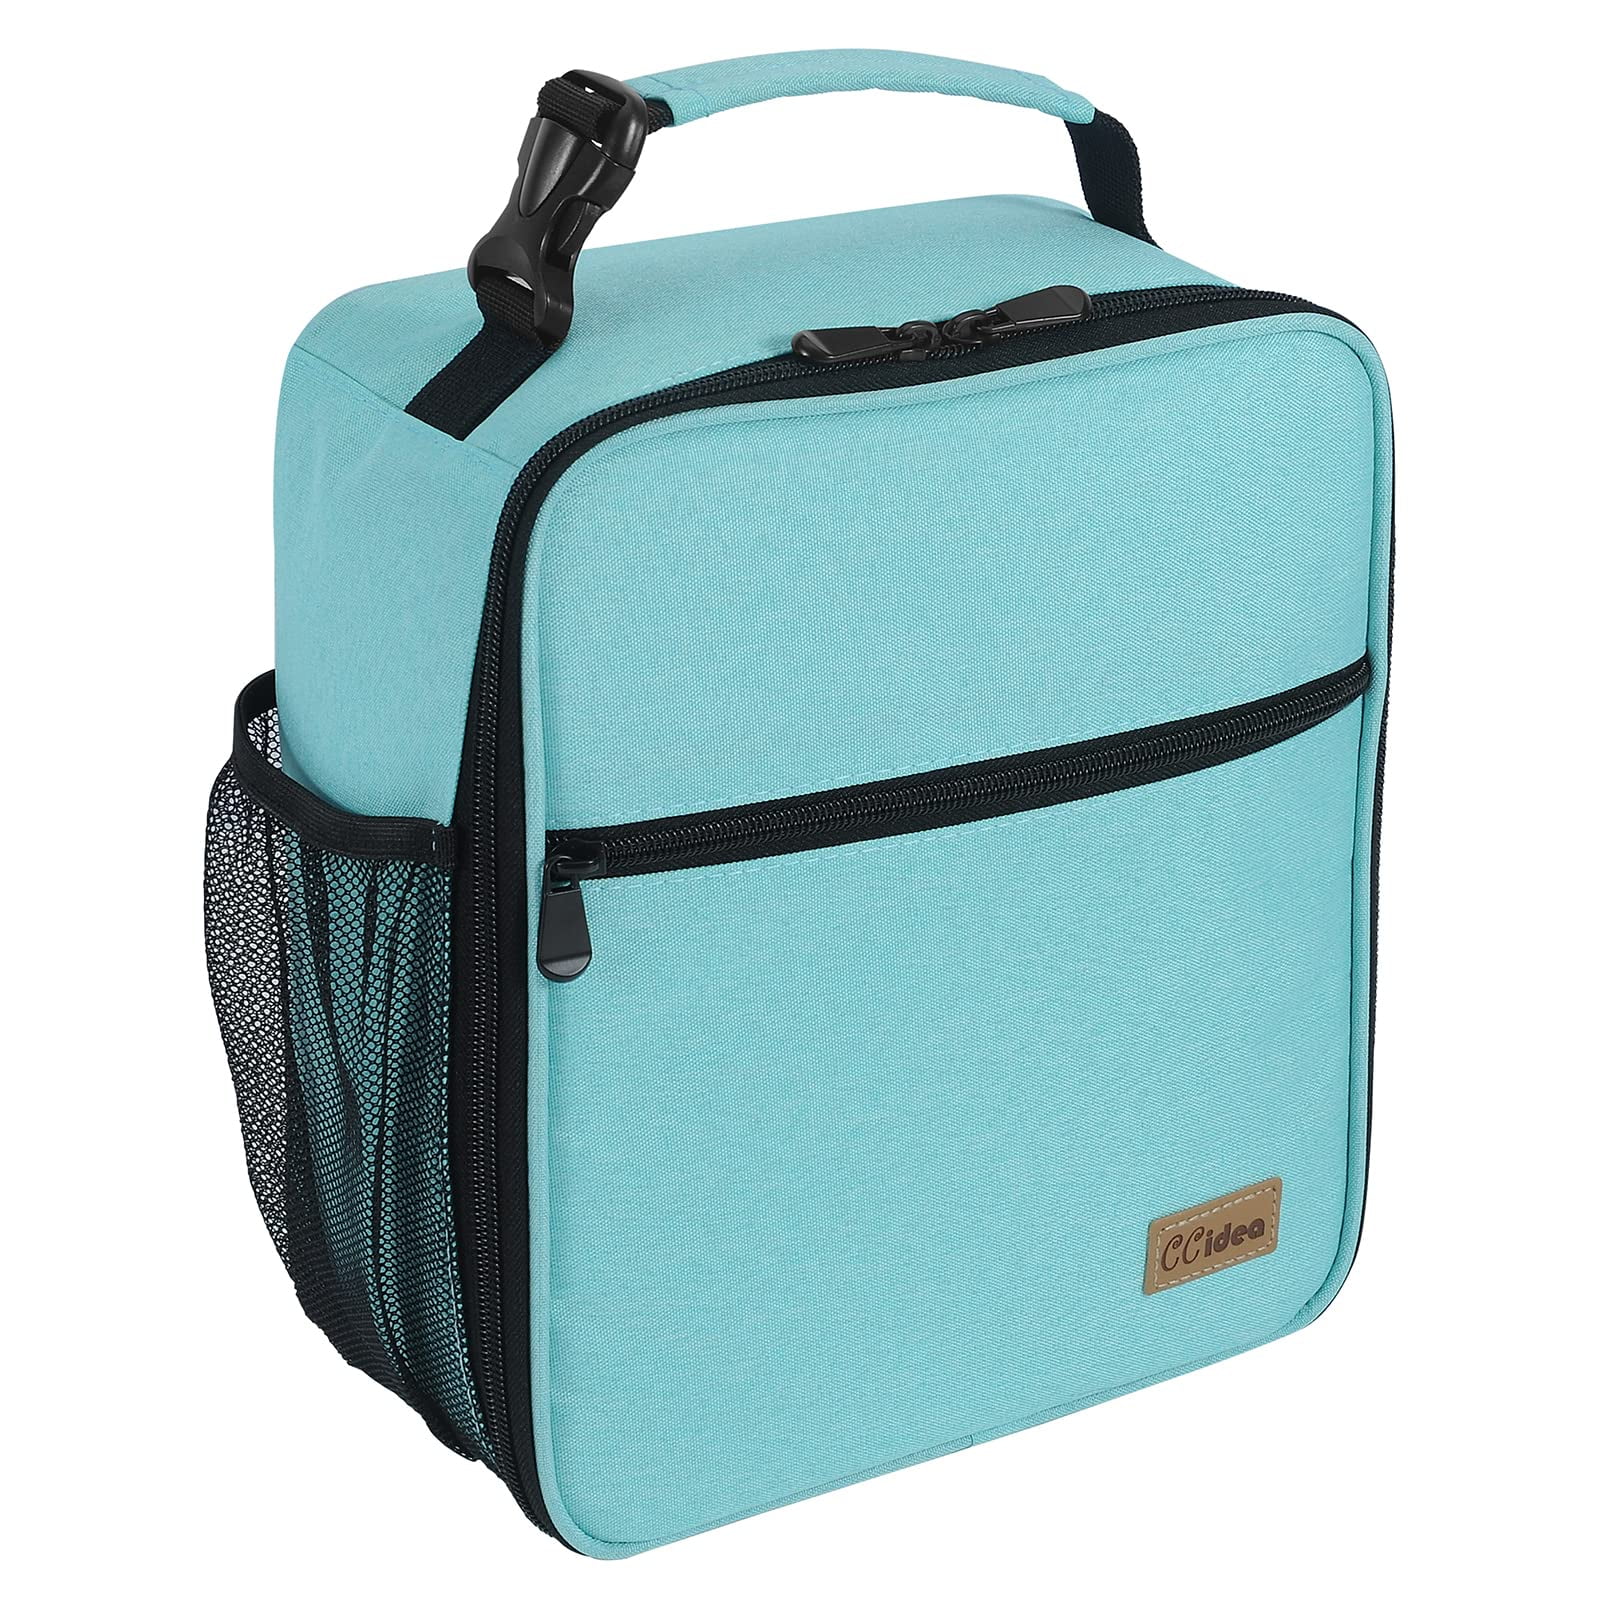 CCidea Lunch Bag for Women Men Kids, Waterproof Insulated Lunch Box ...